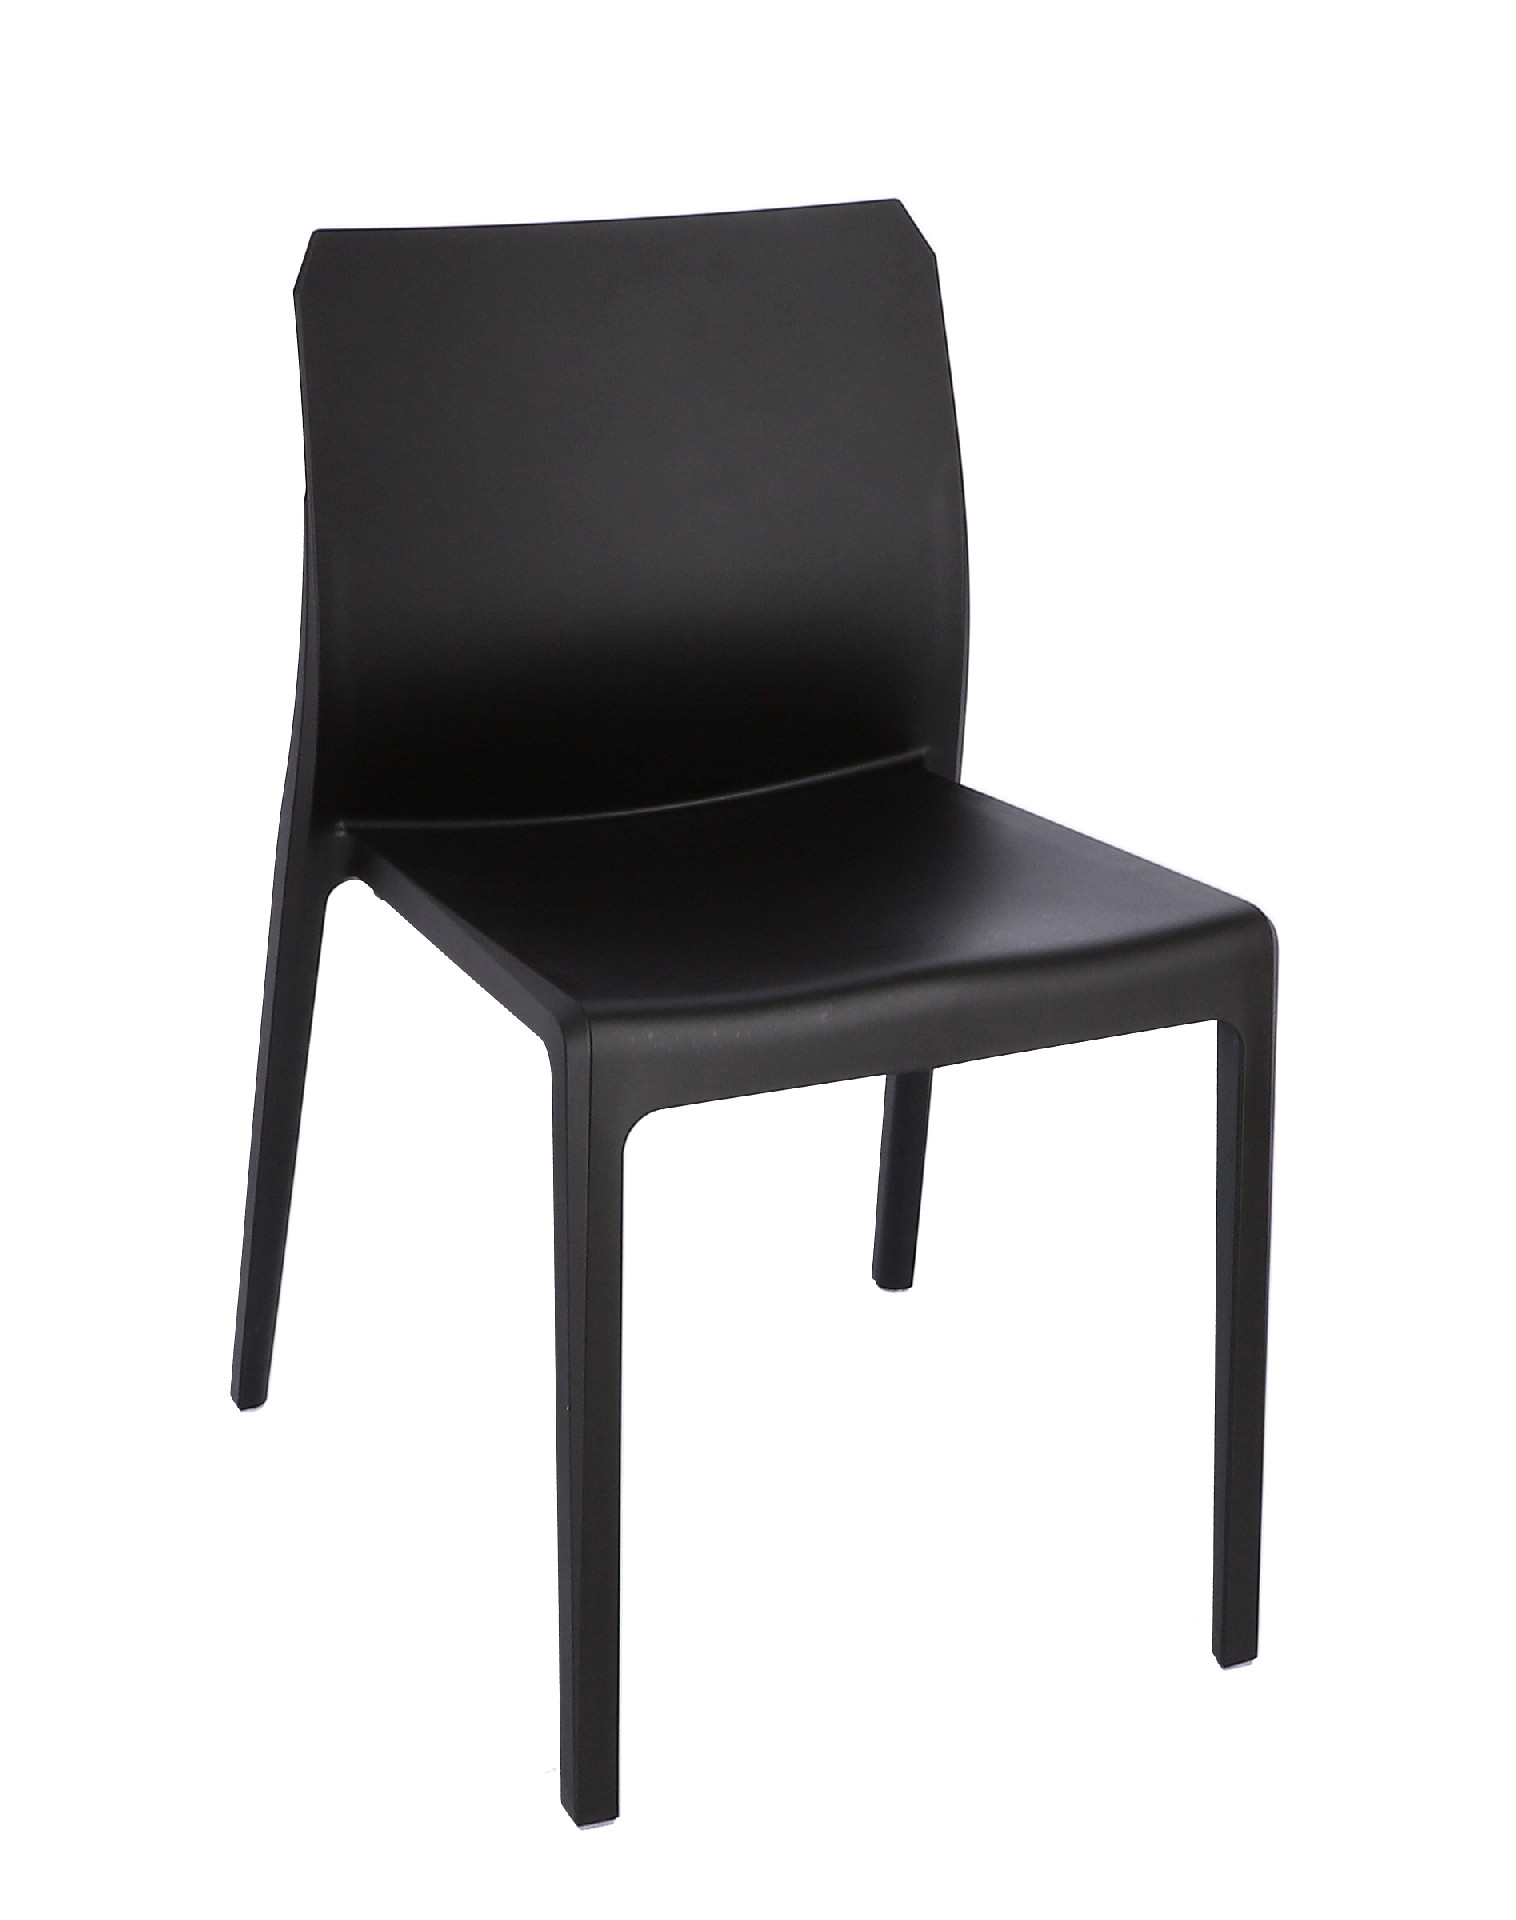 Stilvoller Stapelstuhl Mia aus Kunststoff Outdoor geeignet